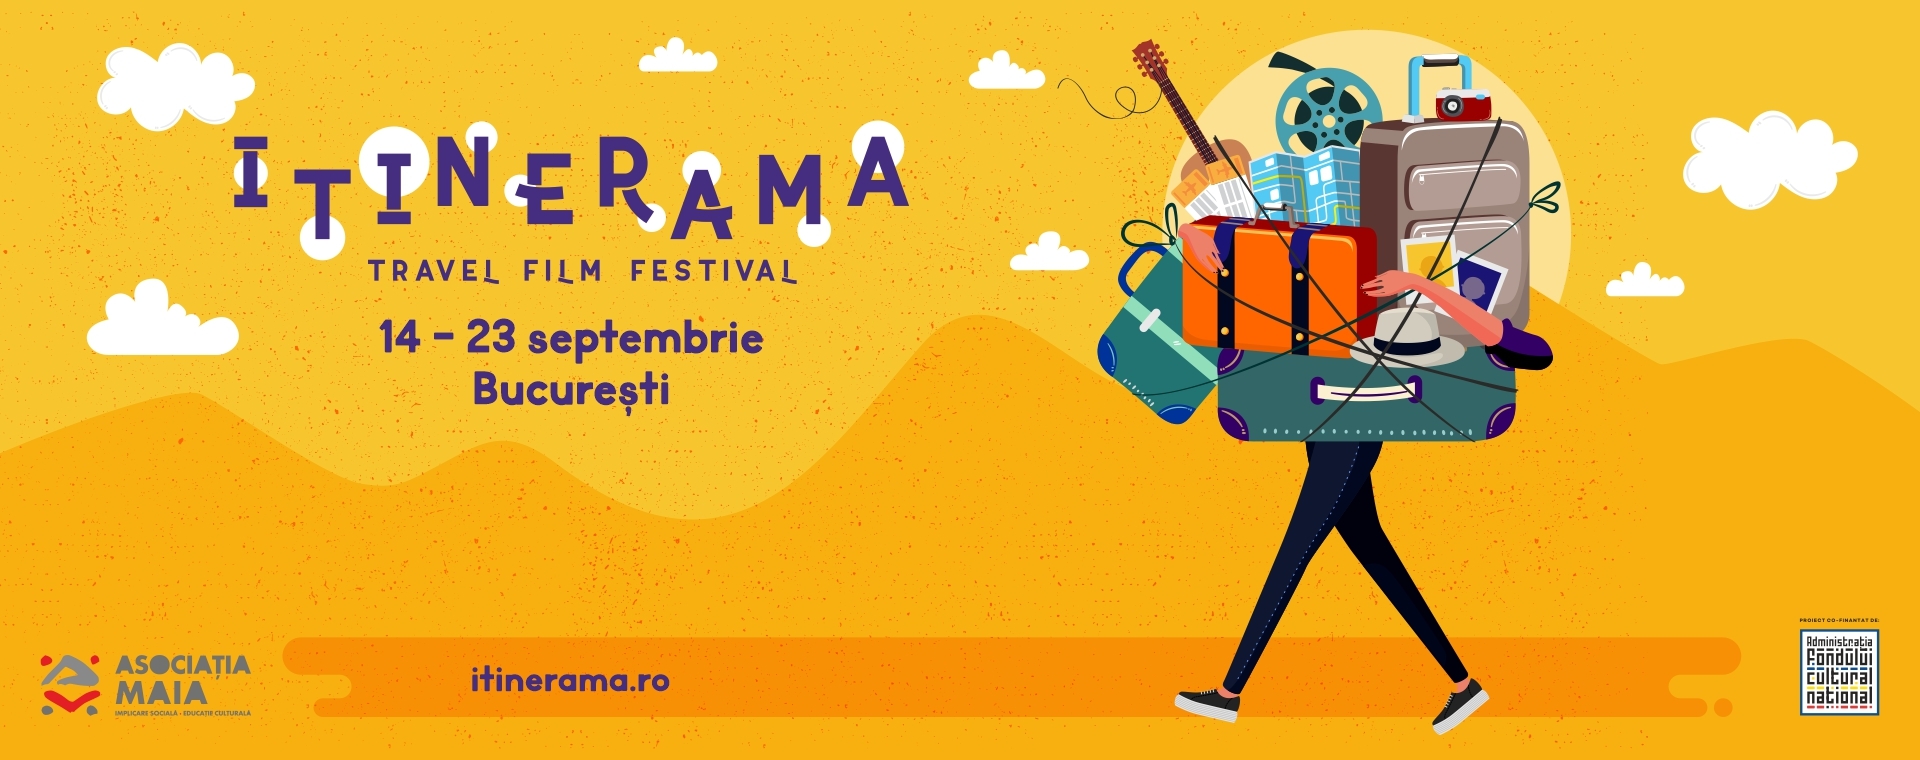 Itinerama Travel Film Festival